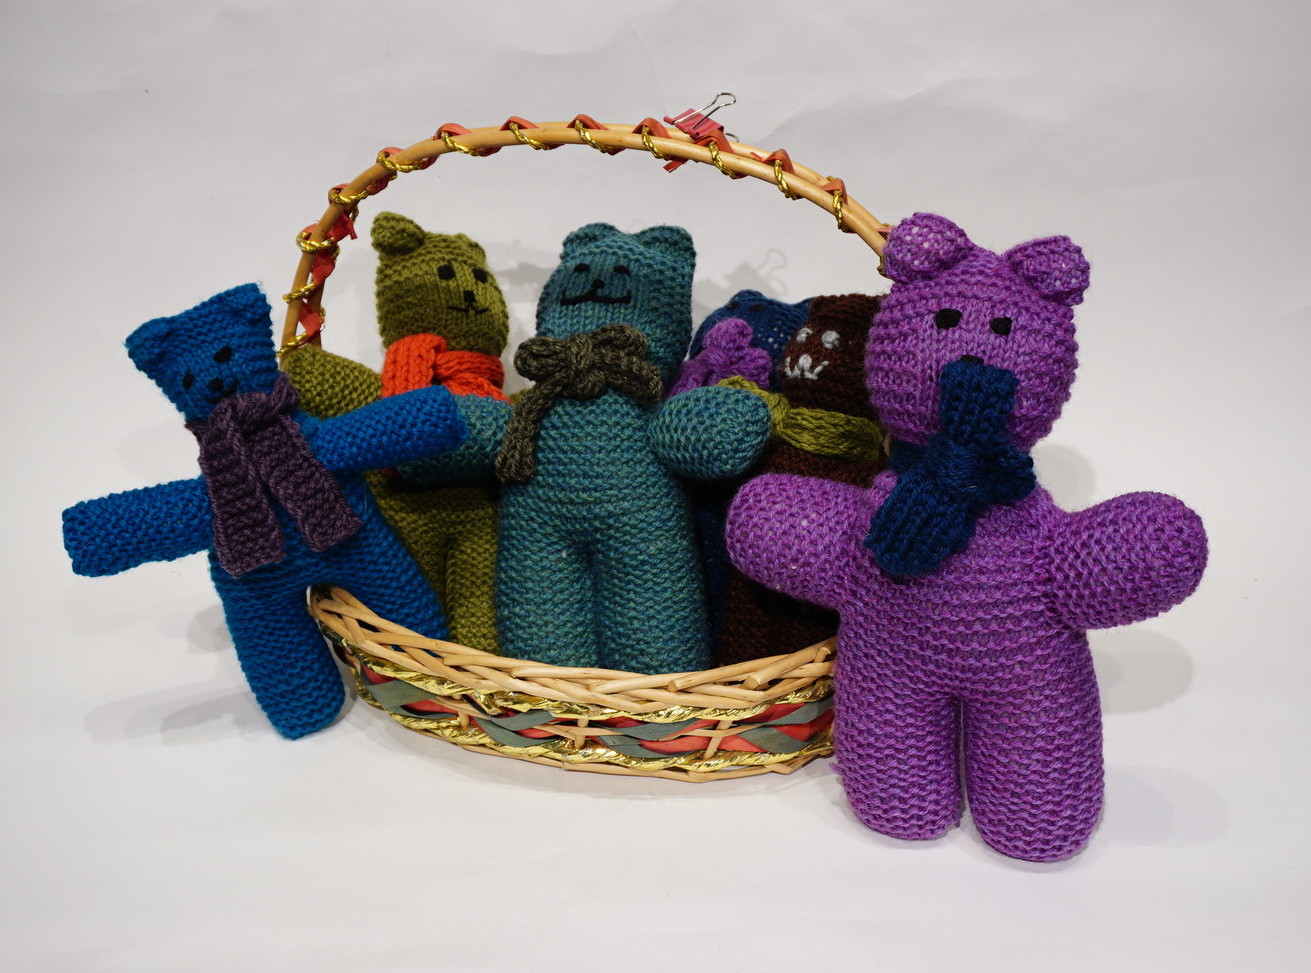 <p>Knitted Teddy Bears&nbsp;</p>